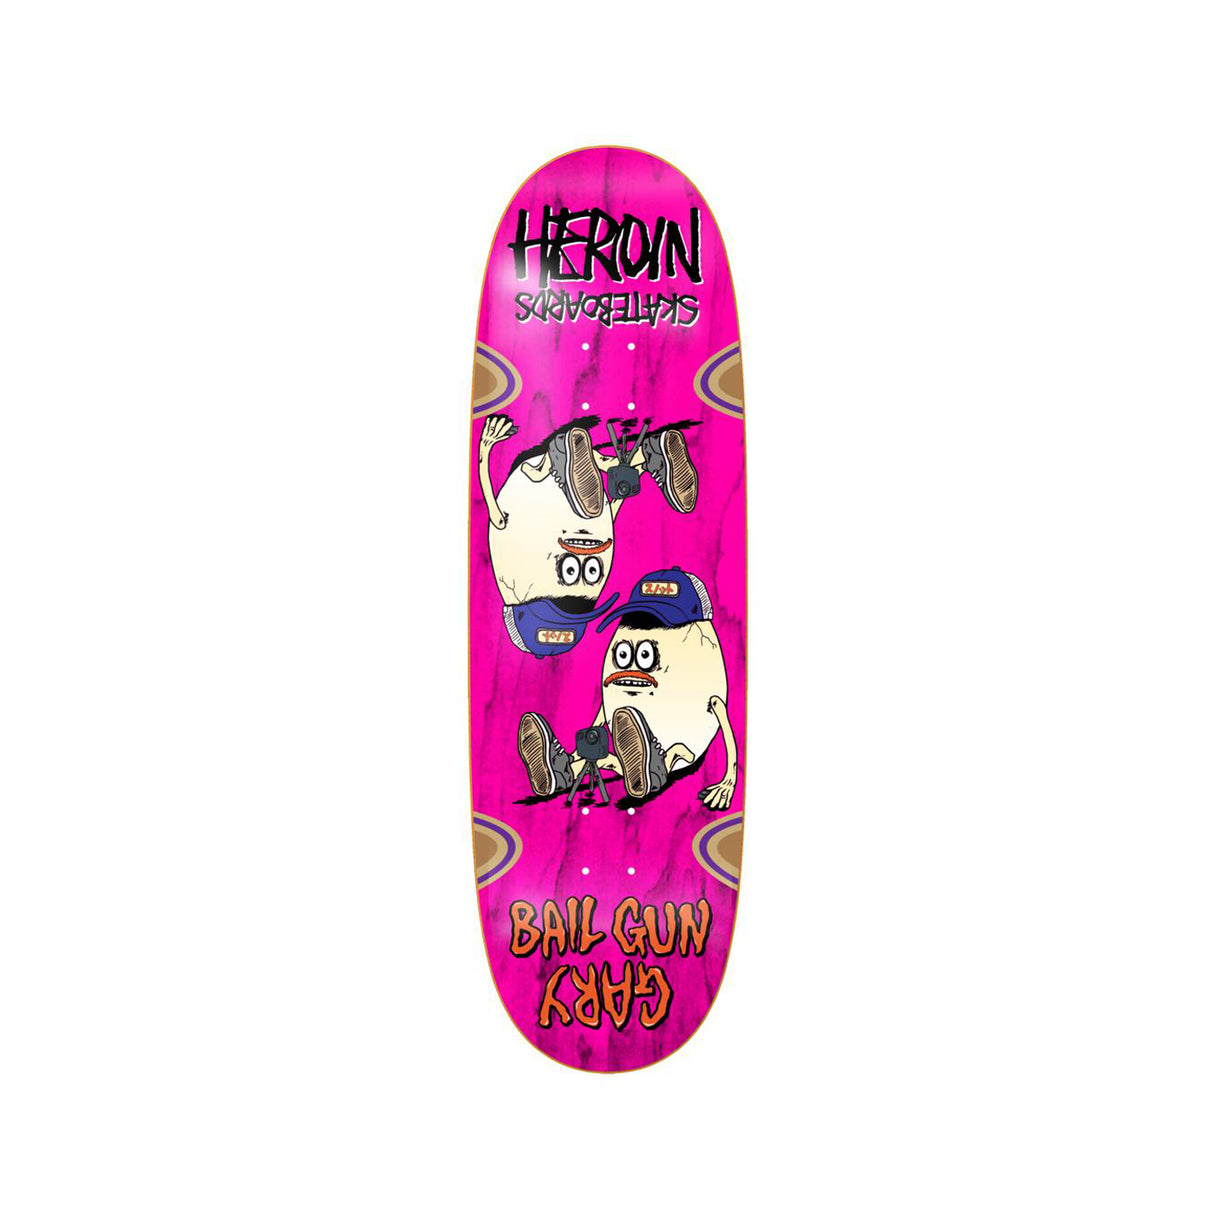 Heroin Skateboards Bail Gun Gary 4 9.75 x 32.5 Deck w/ Pepper Grip